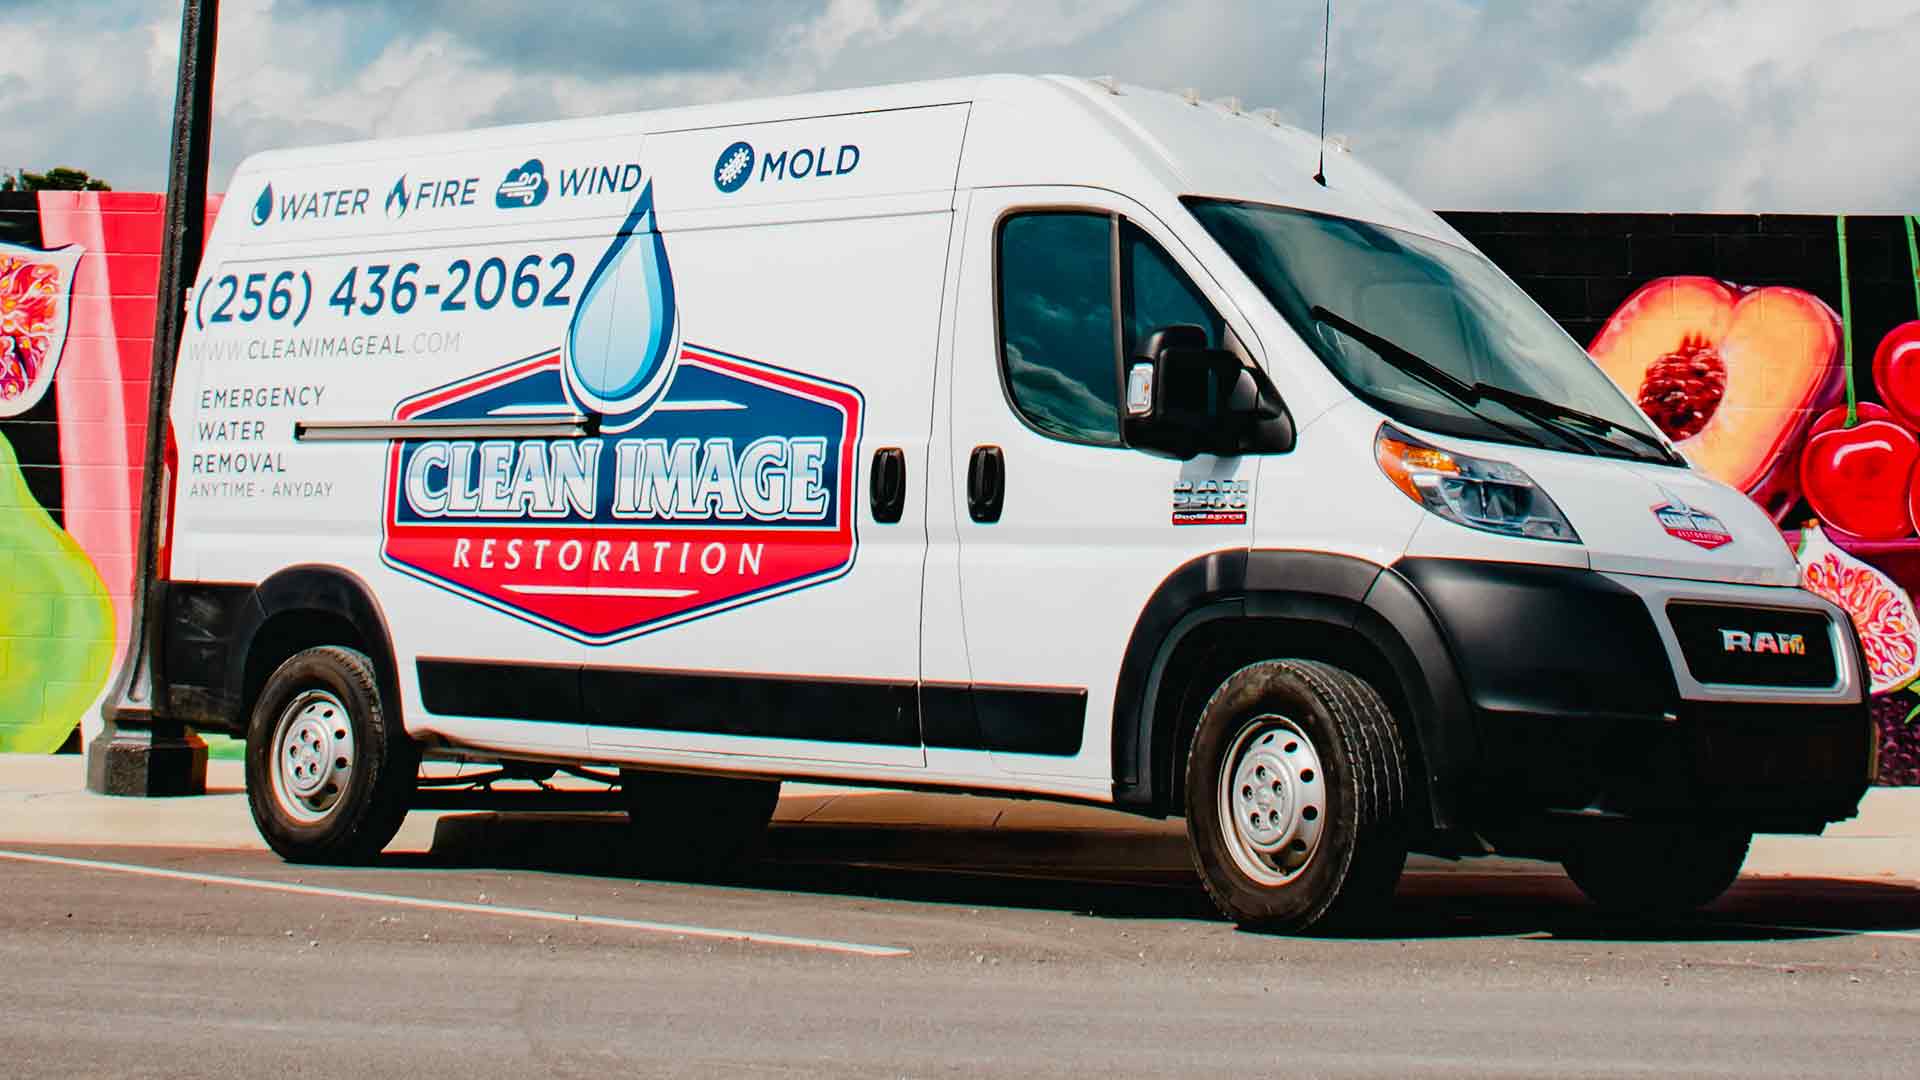 Clean Image Restoration Service Van